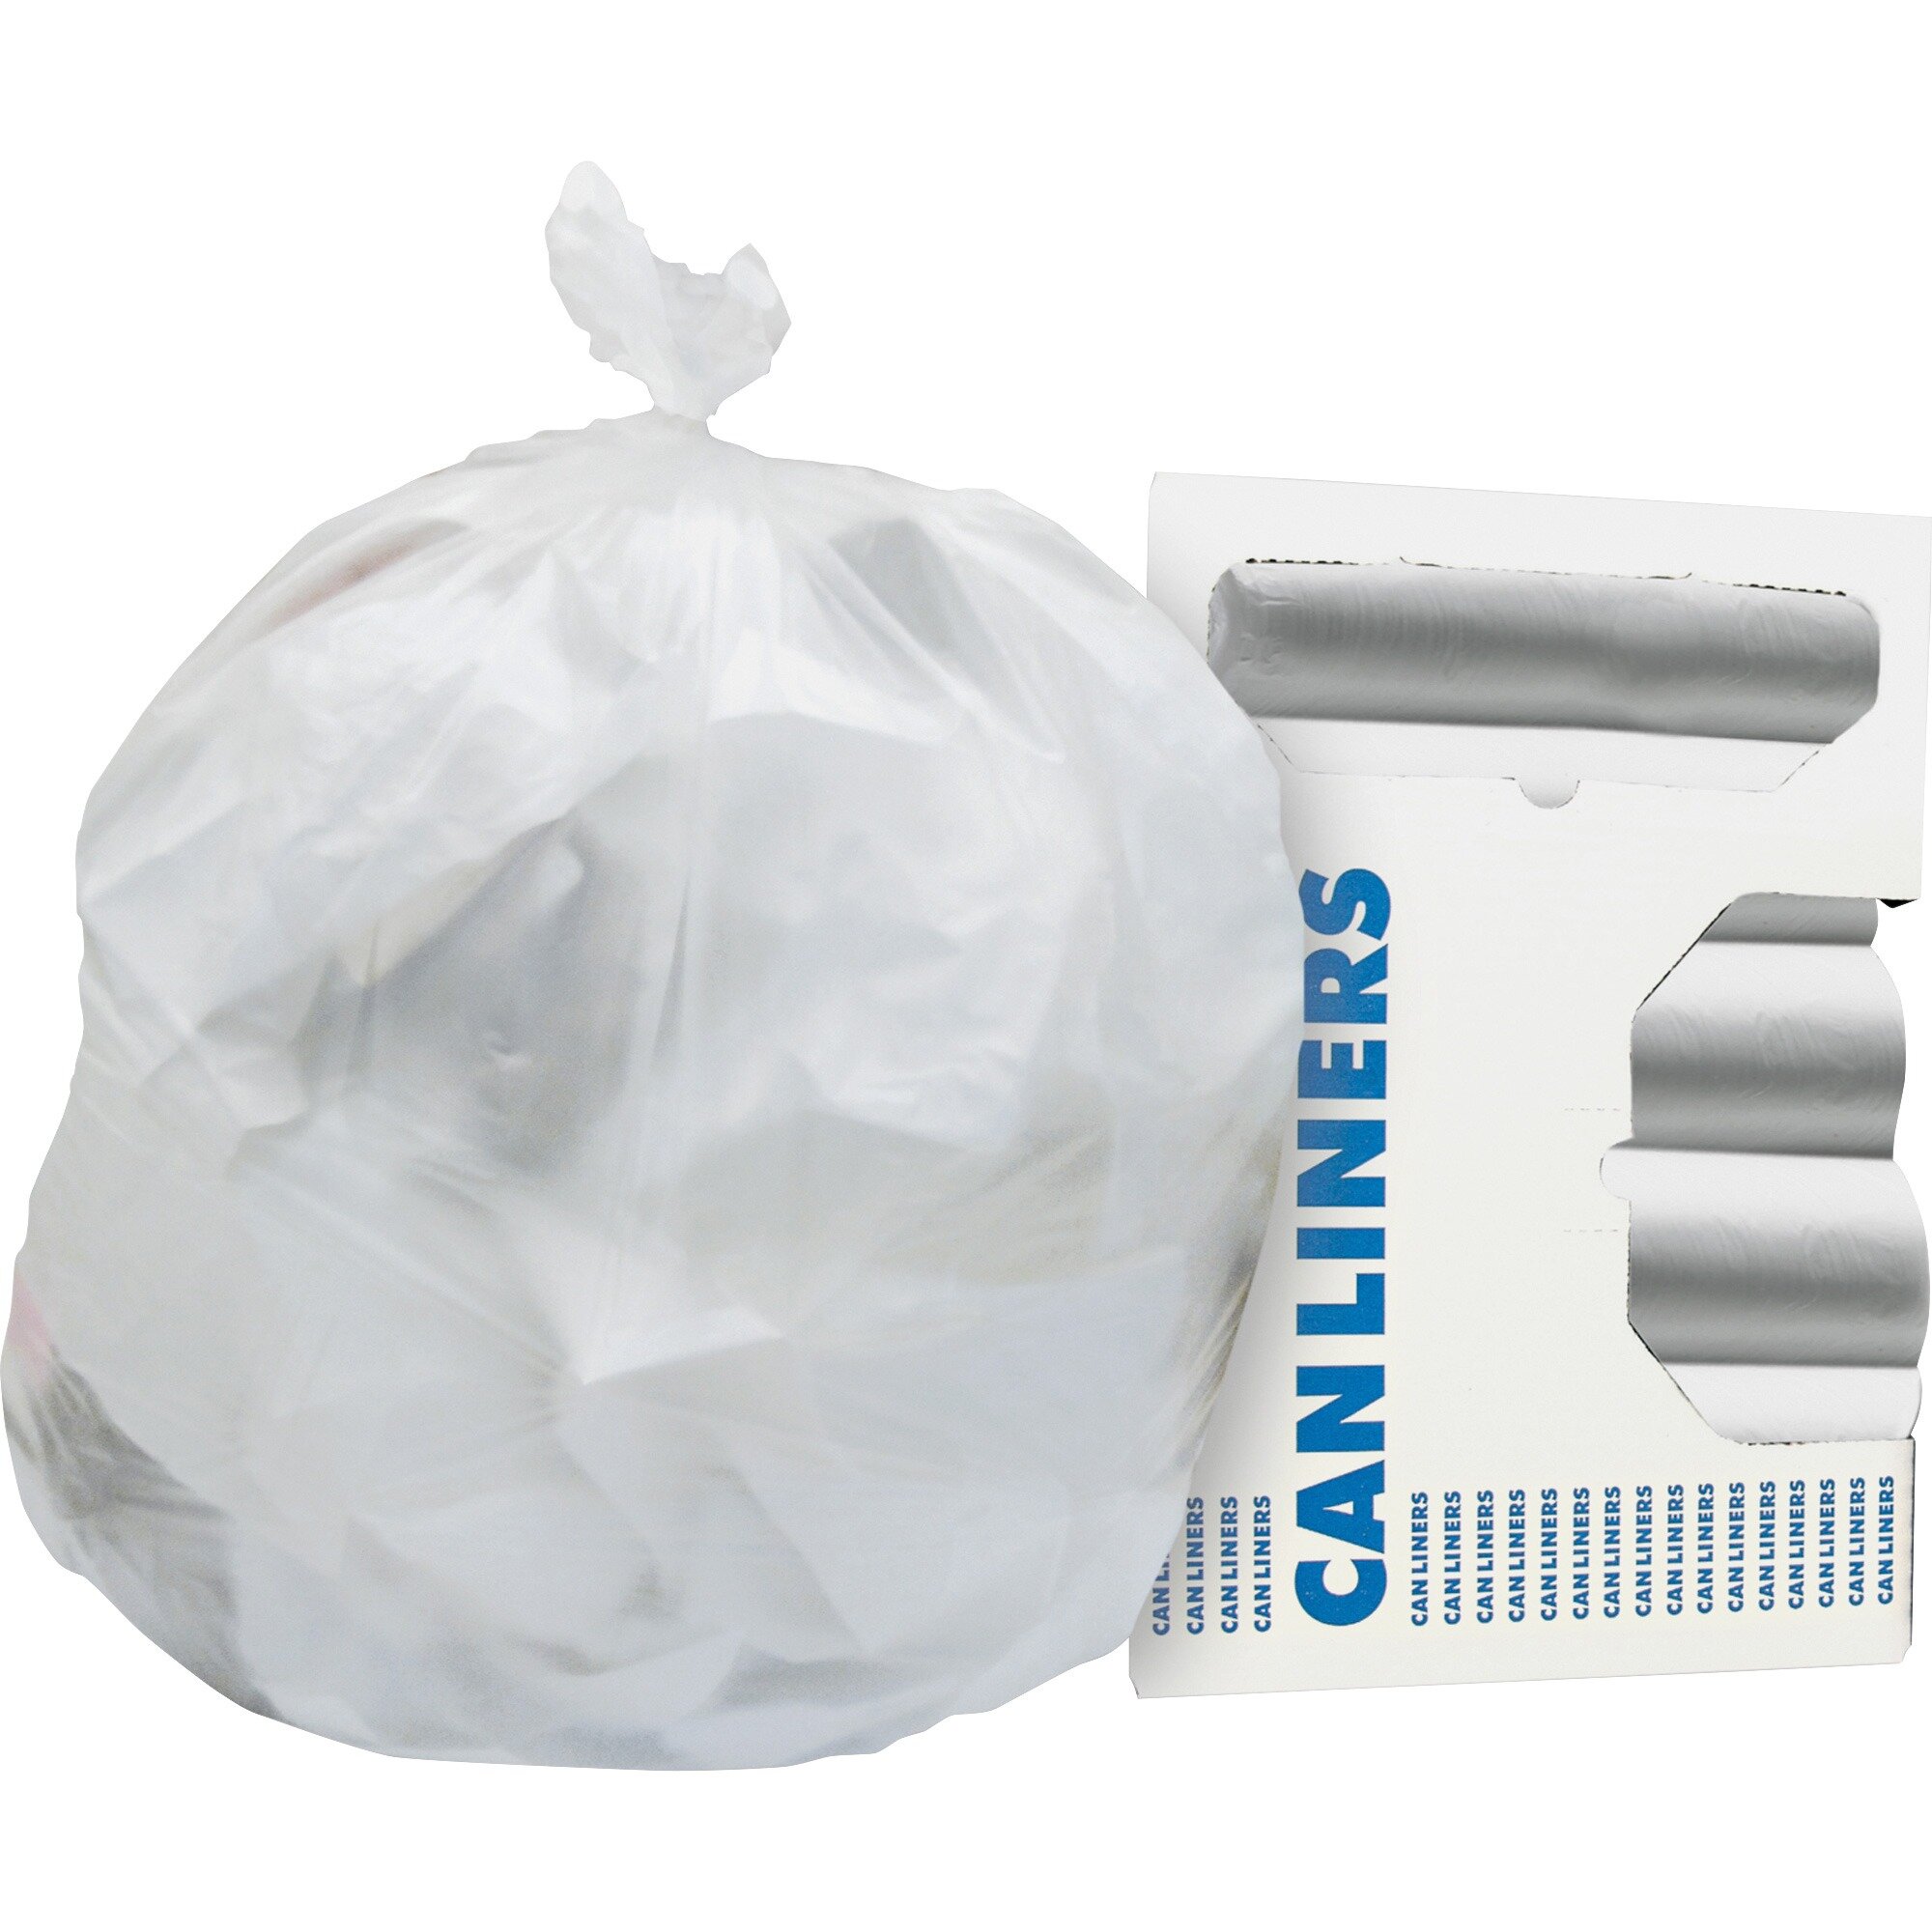 Boshen 64 Gallons Plastic Trash Bags - 50 Count